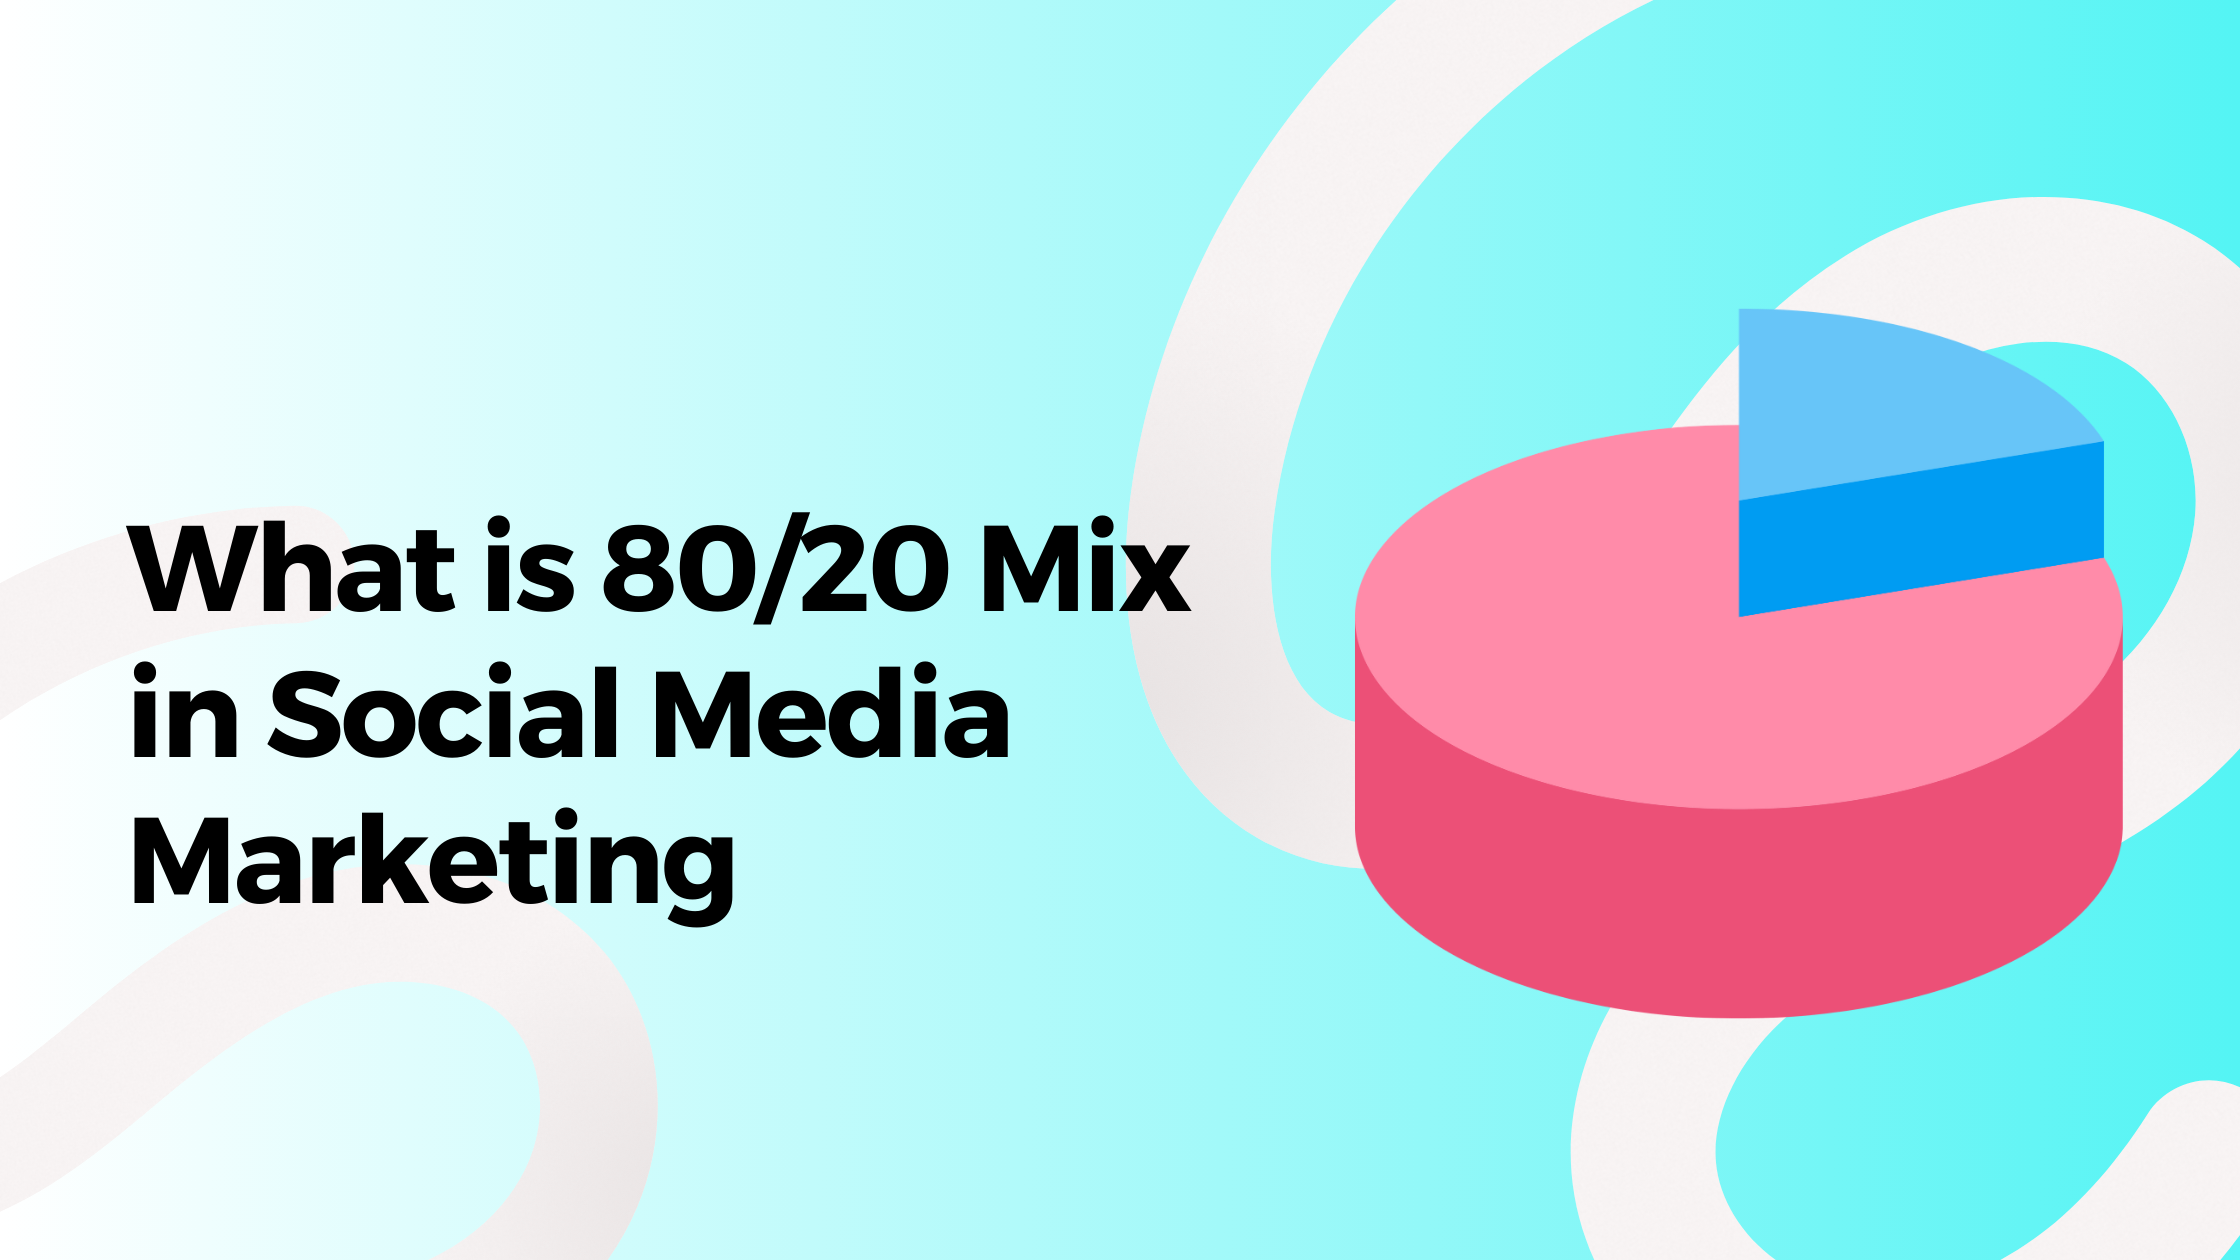 Social media marketing mix